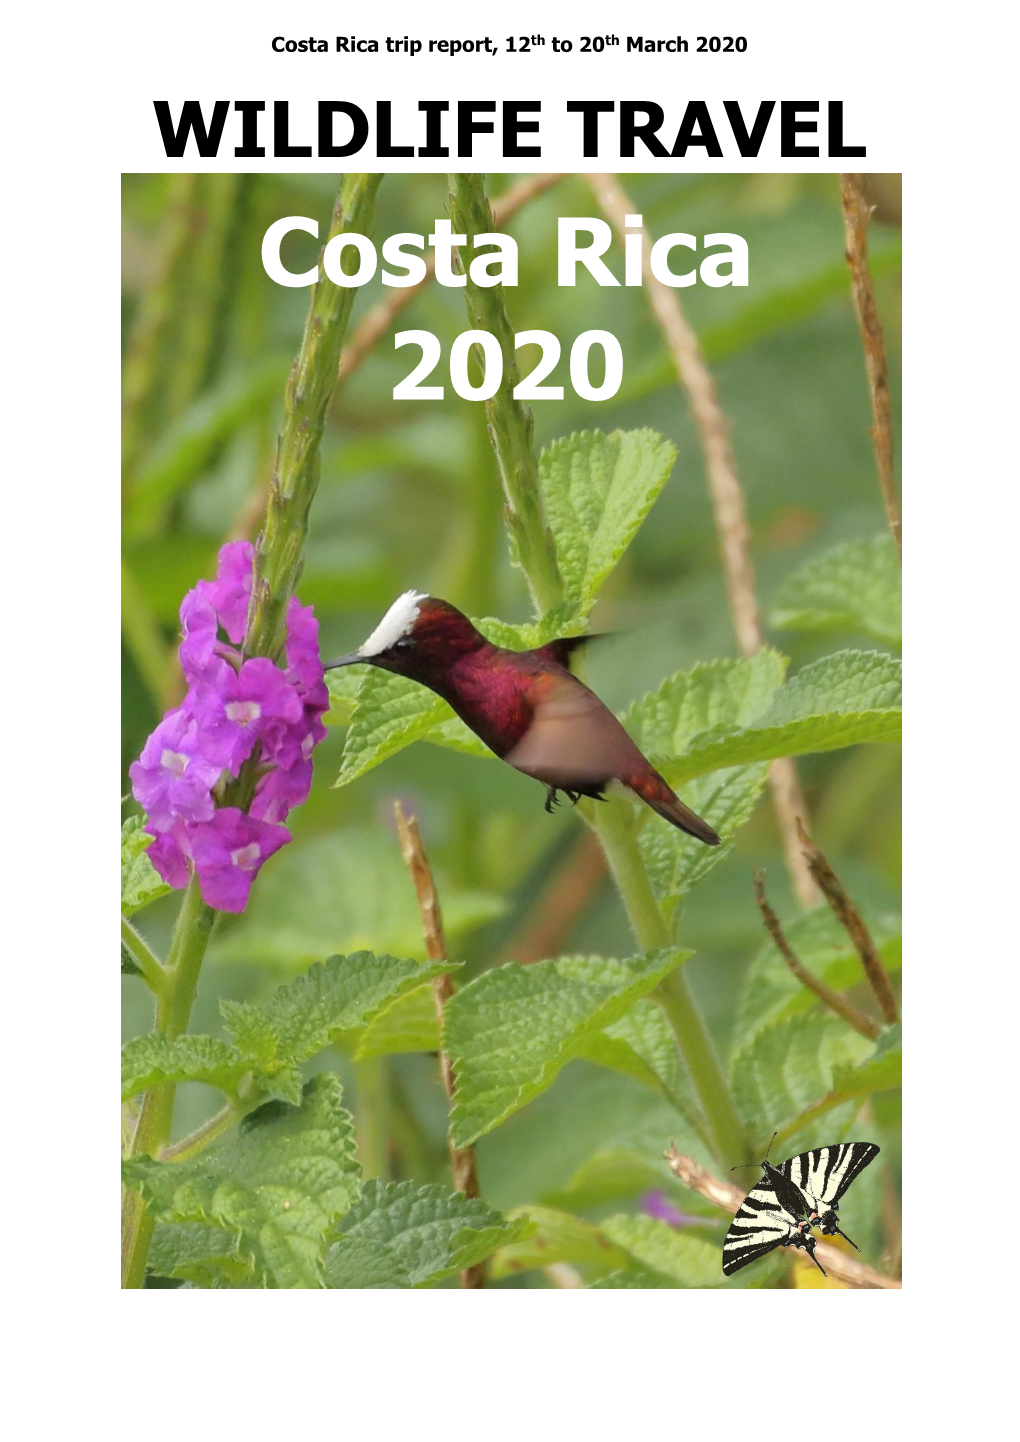 WILDLIFE TRAVEL Costa Rica 2020